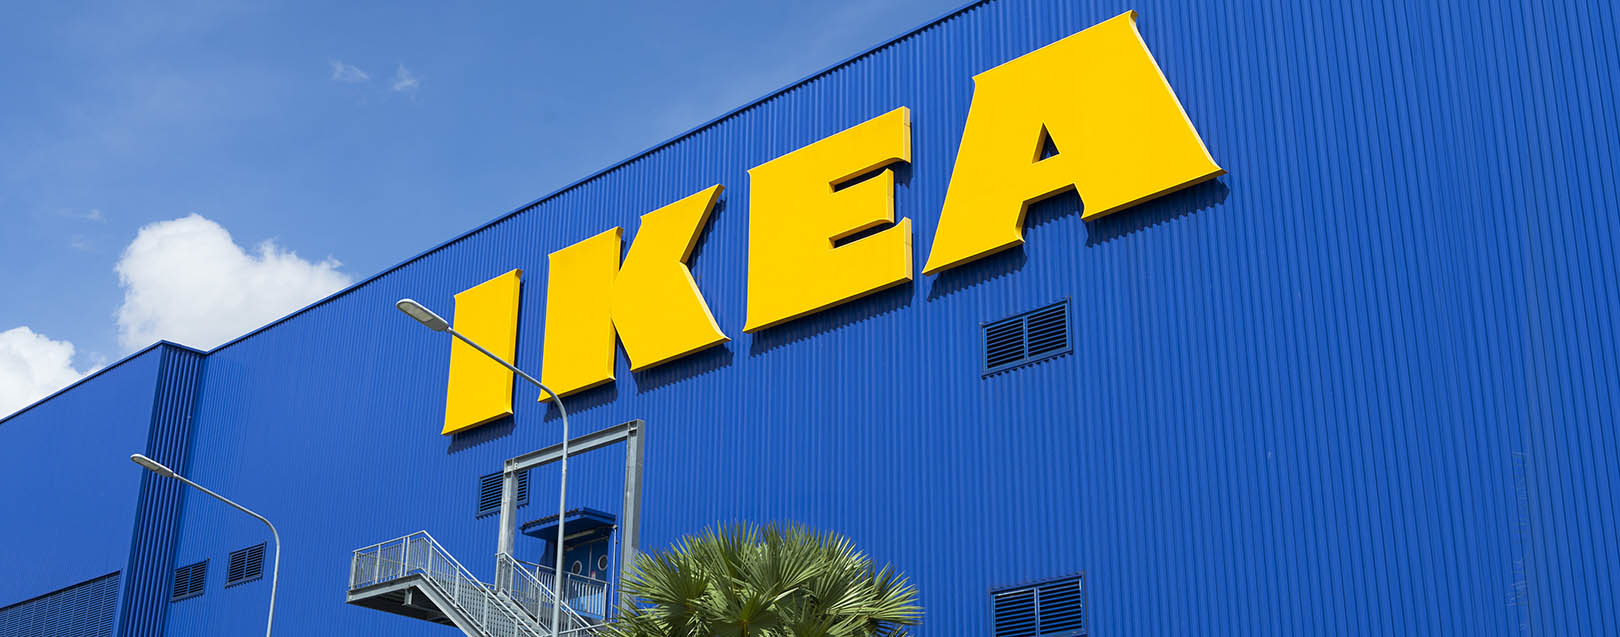 Mumbai to get its first IKEA retail store